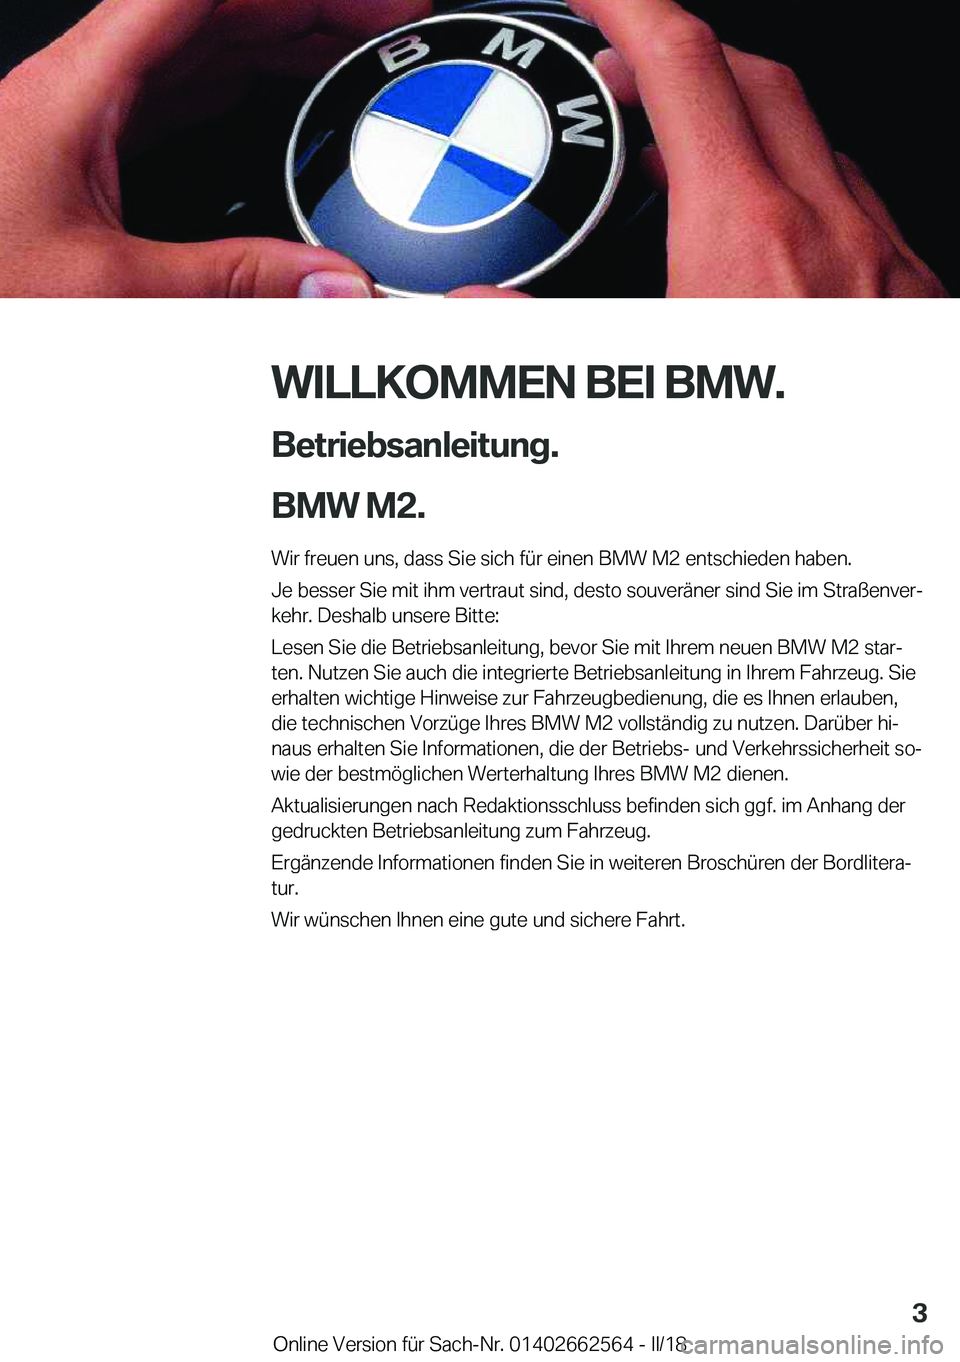 BMW M2 2018  Betriebsanleitungen (in German) �W�I�L�L�K�O�M�M�E�N��B�E�I��B�M�W�.�B�e�t�r�i�e�b�s�a�n�l�e�i�t�u�n�g�.
�B�M�W��M�2�.� �W�i�r� �f�r�e�u�e�n� �u�n�s�,� �d�a�s�s� �S�i�e� �s�i�c�h� �f�